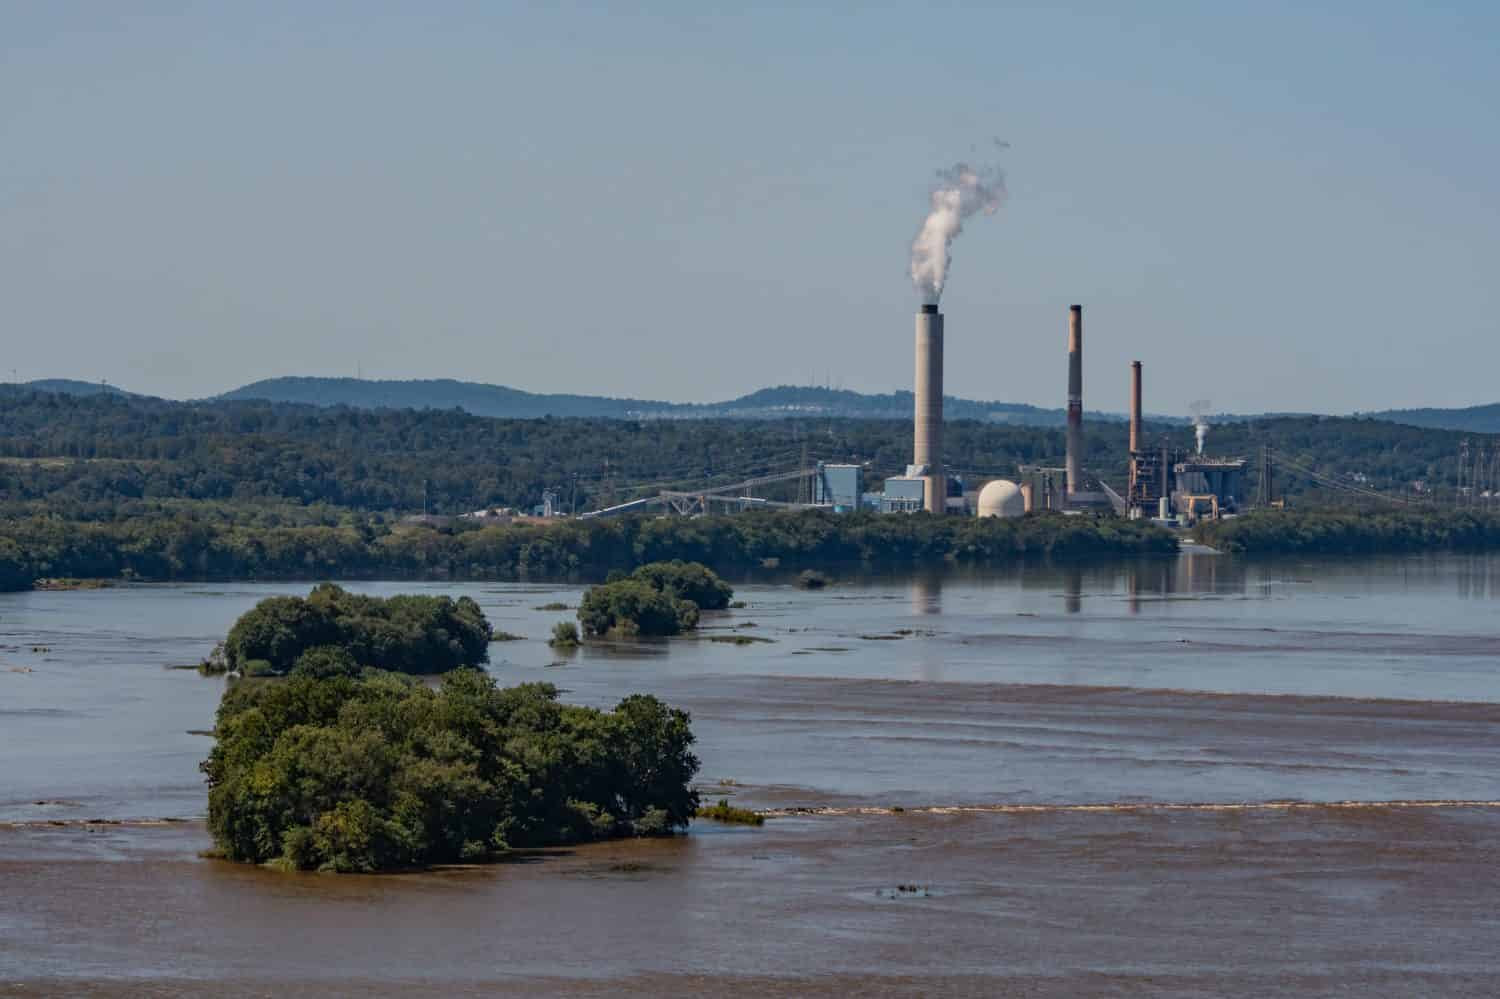 Brunner Island Steam Electric Plant on the Susquehanna River, Pennsylvania USA